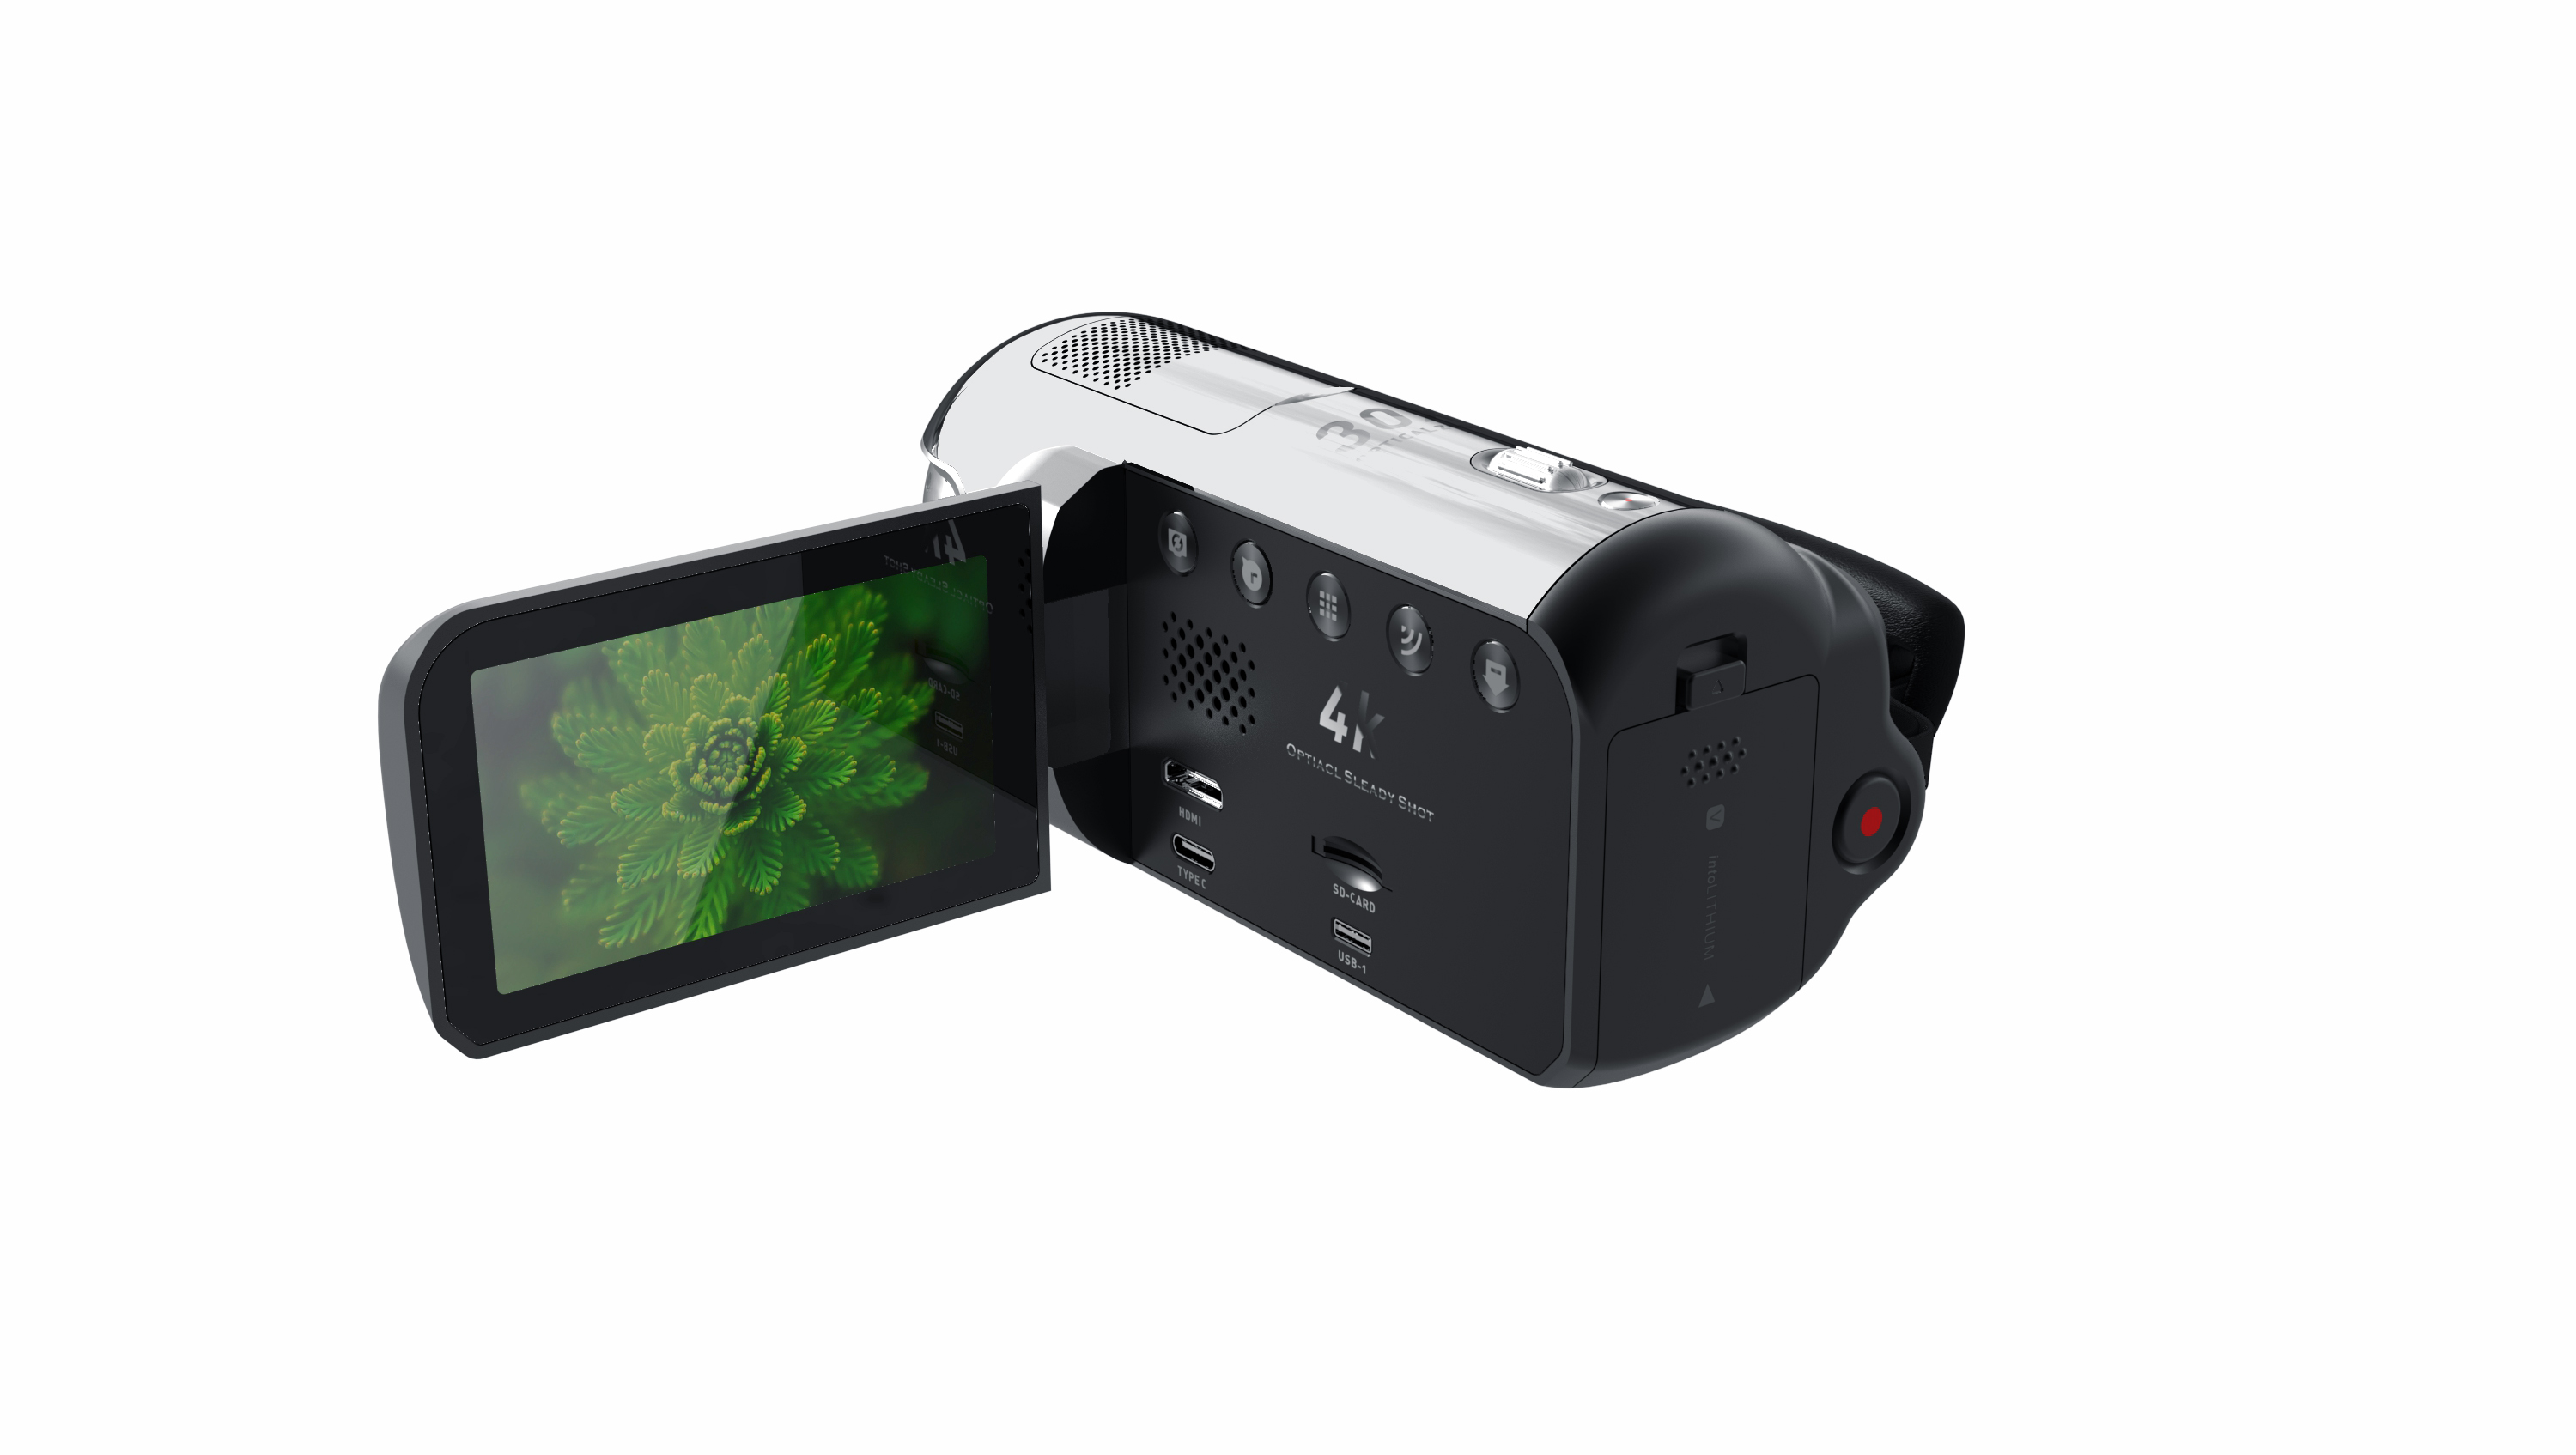 PTZ (Pan-tile-Zoom) DV Camera